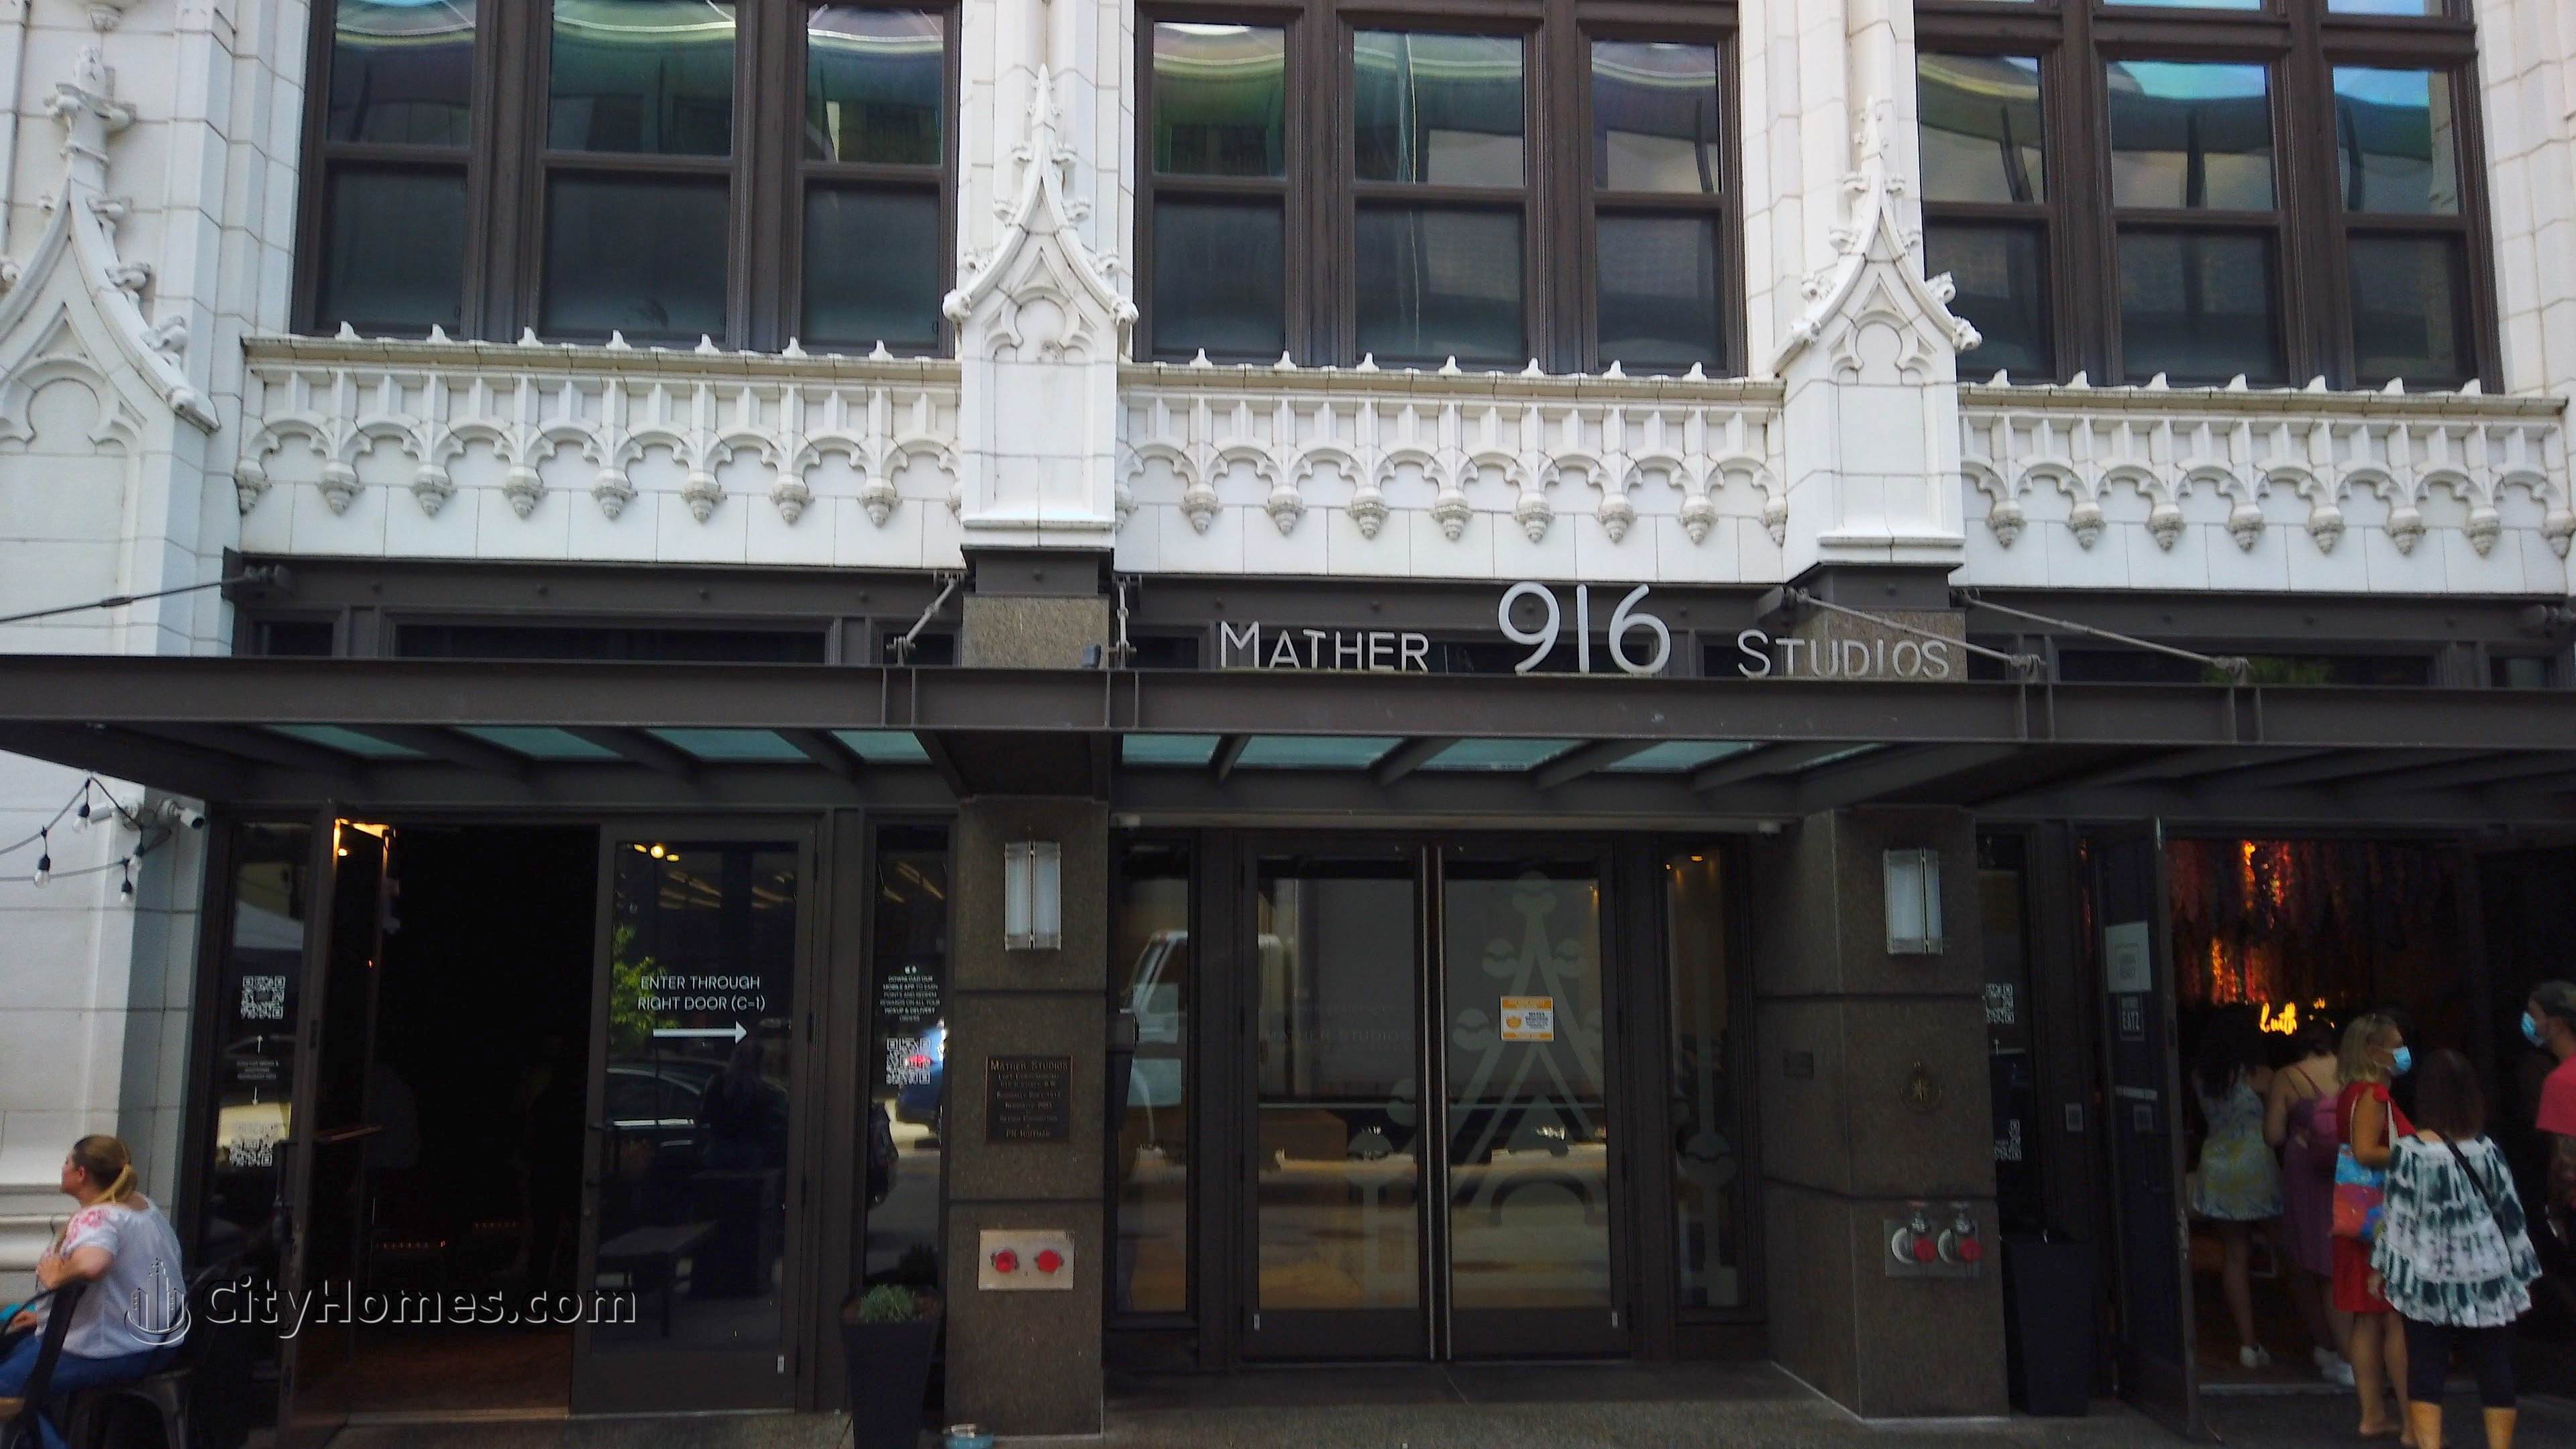 Mather Studios建於 916 G St NW, Penn Quarter, Washington, DC 20001